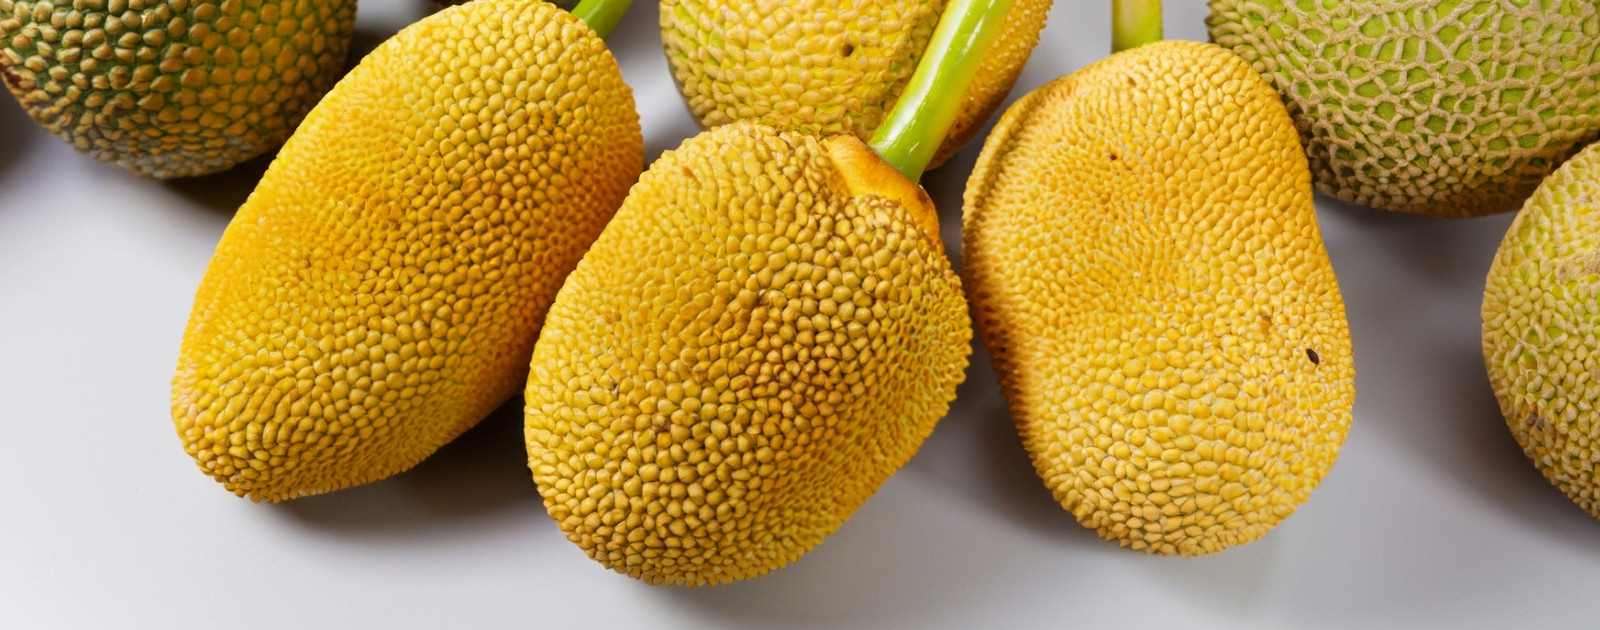 Is Jackfruit a Melon or a Fruit?